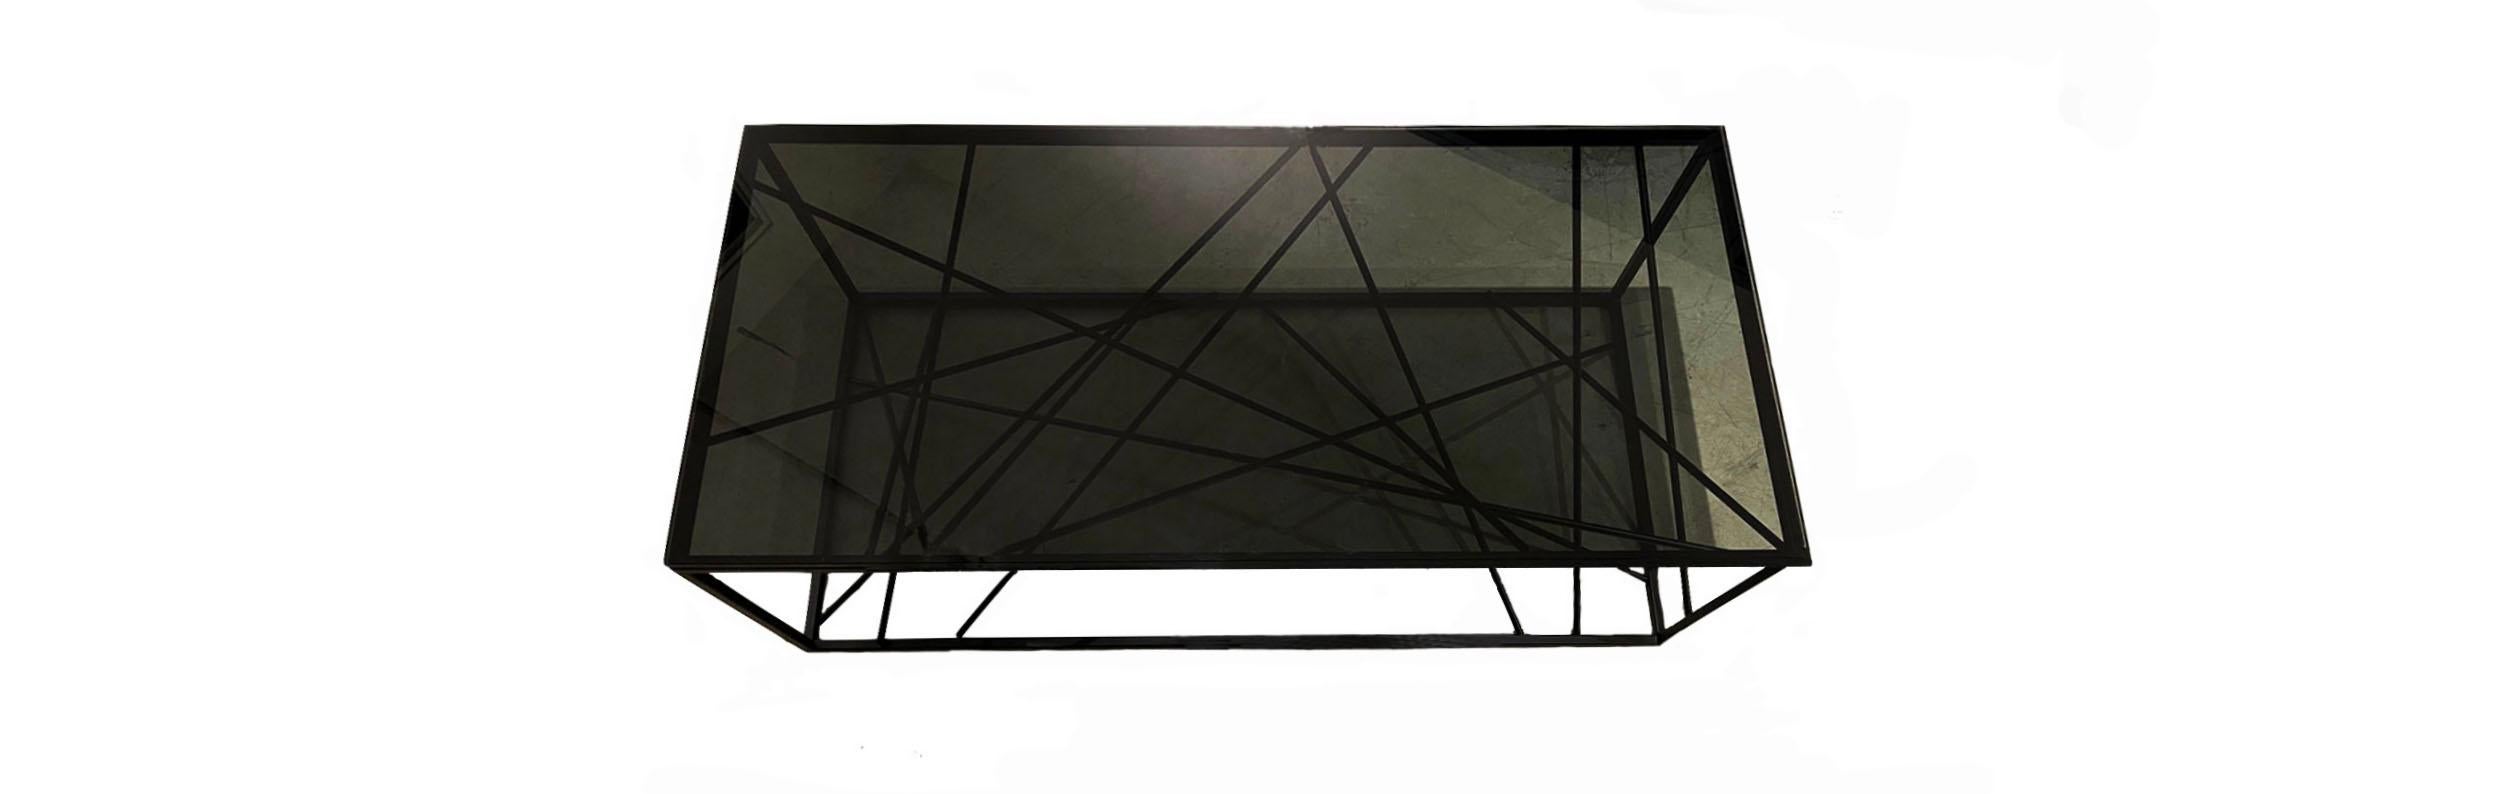 Moderne Table basse Nest de Morgan Clayhall, sculpturale, acier, verre, personnalisée en vente